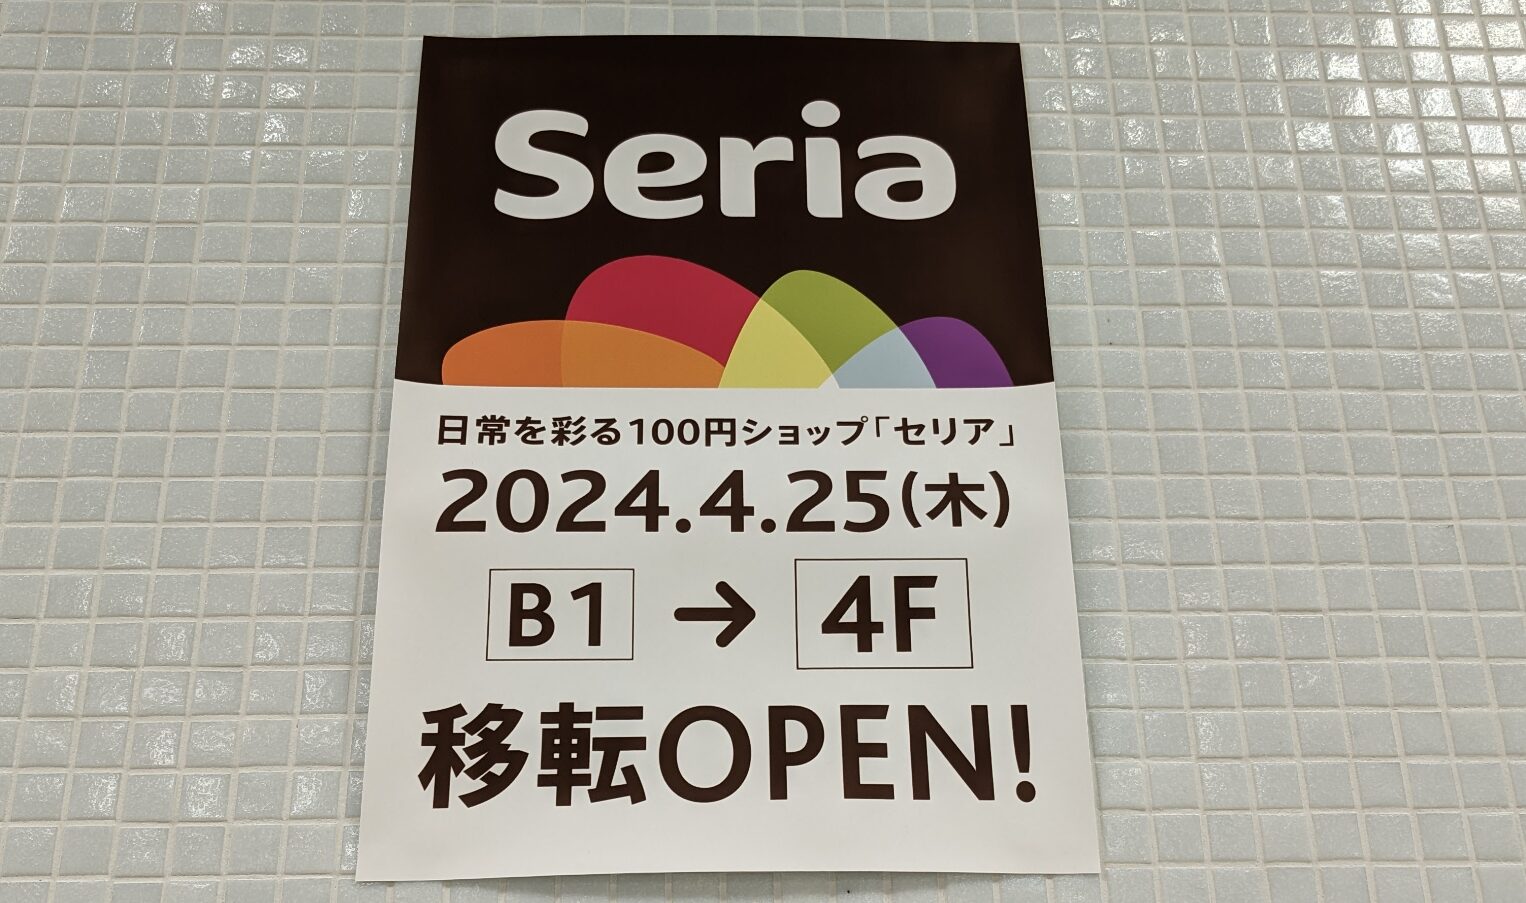 mewe橋本の「セリア」さん、4/25に4Fにて移転OPENです。